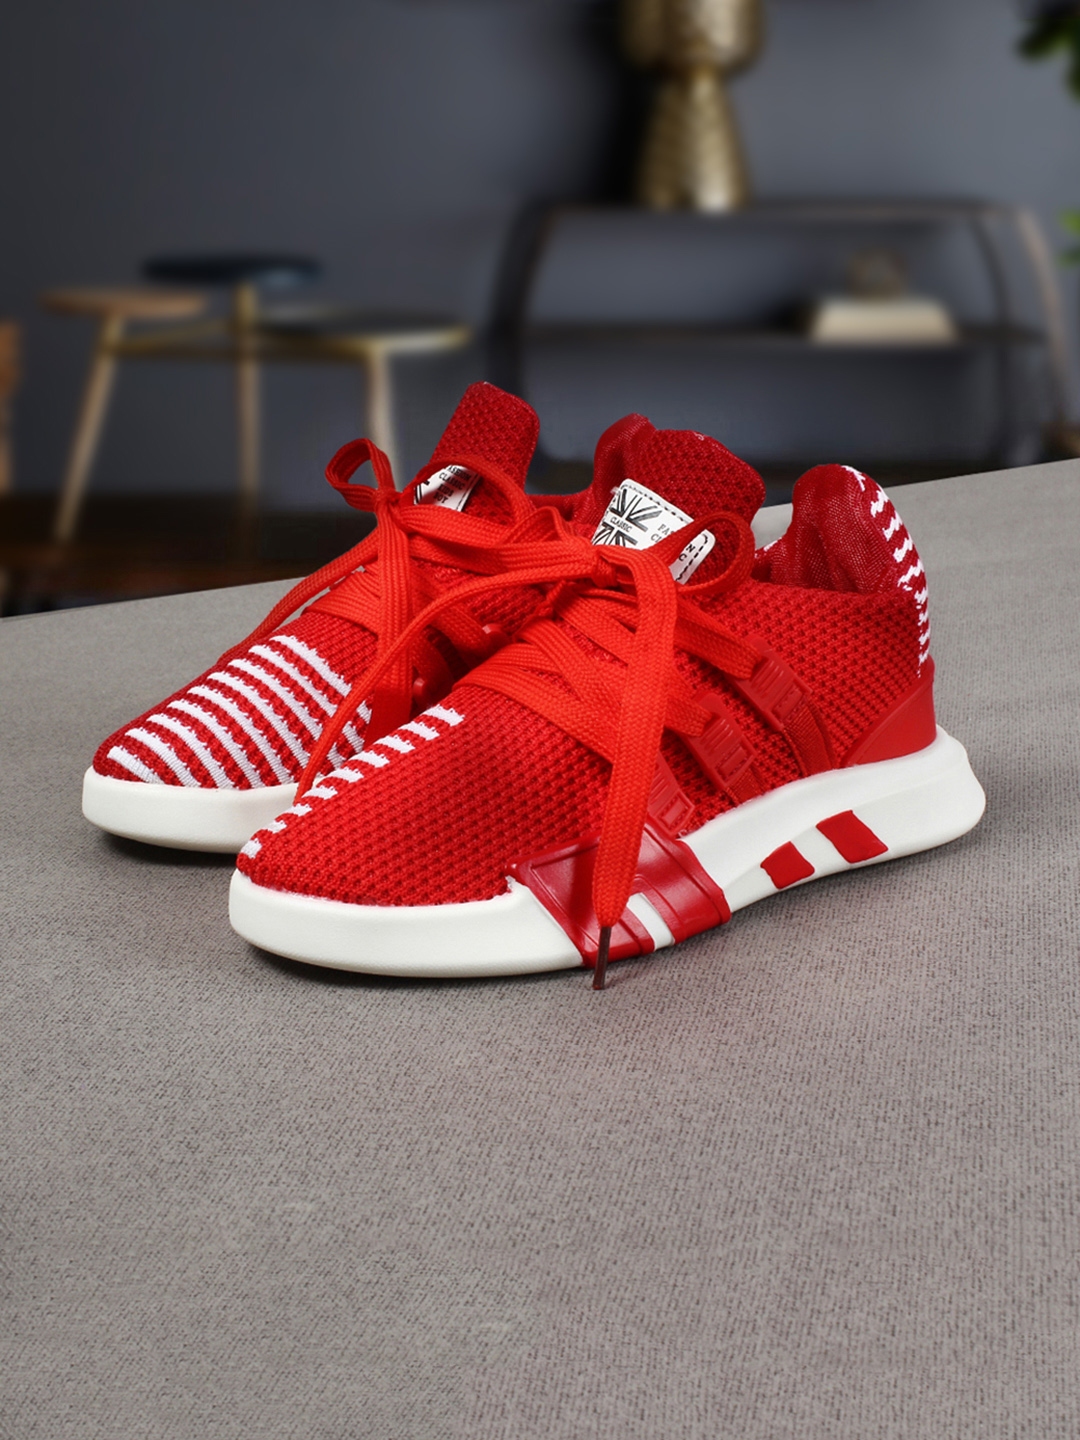 Buy Walktrendy Unisex Red Sneakers - Casual Shoes for Unisex Kids ...